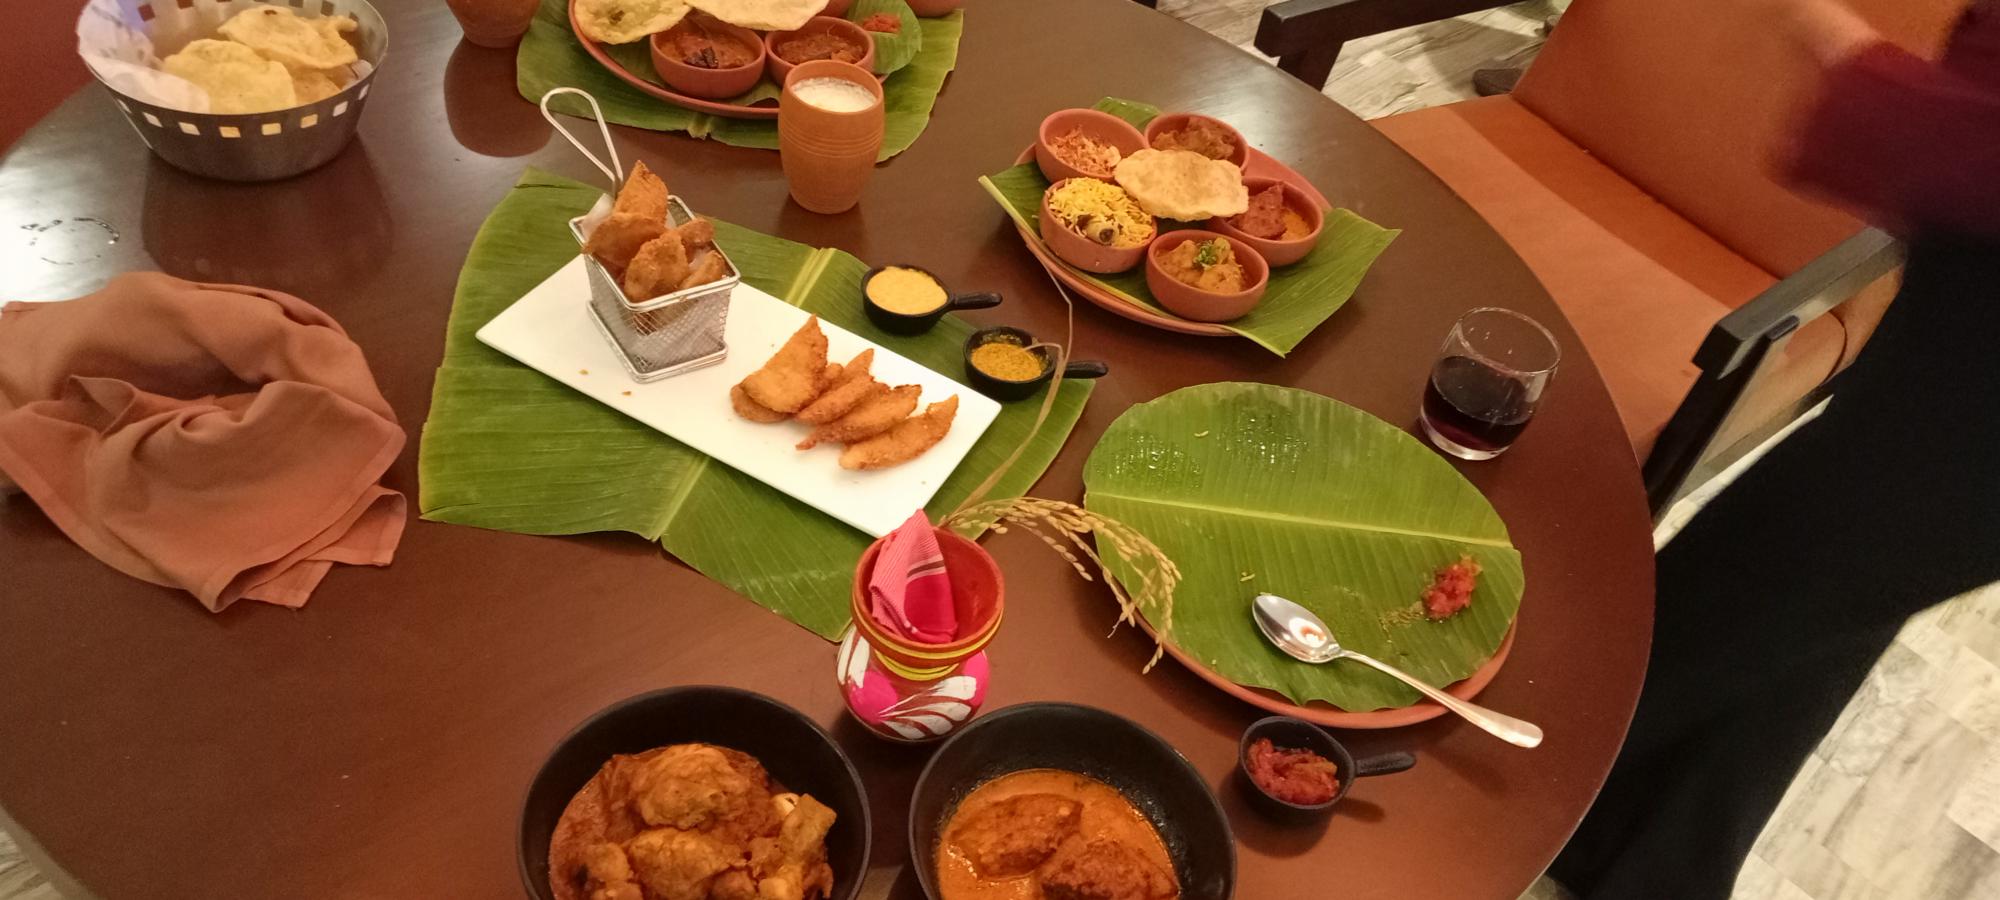 Bengali food festival misses the mark